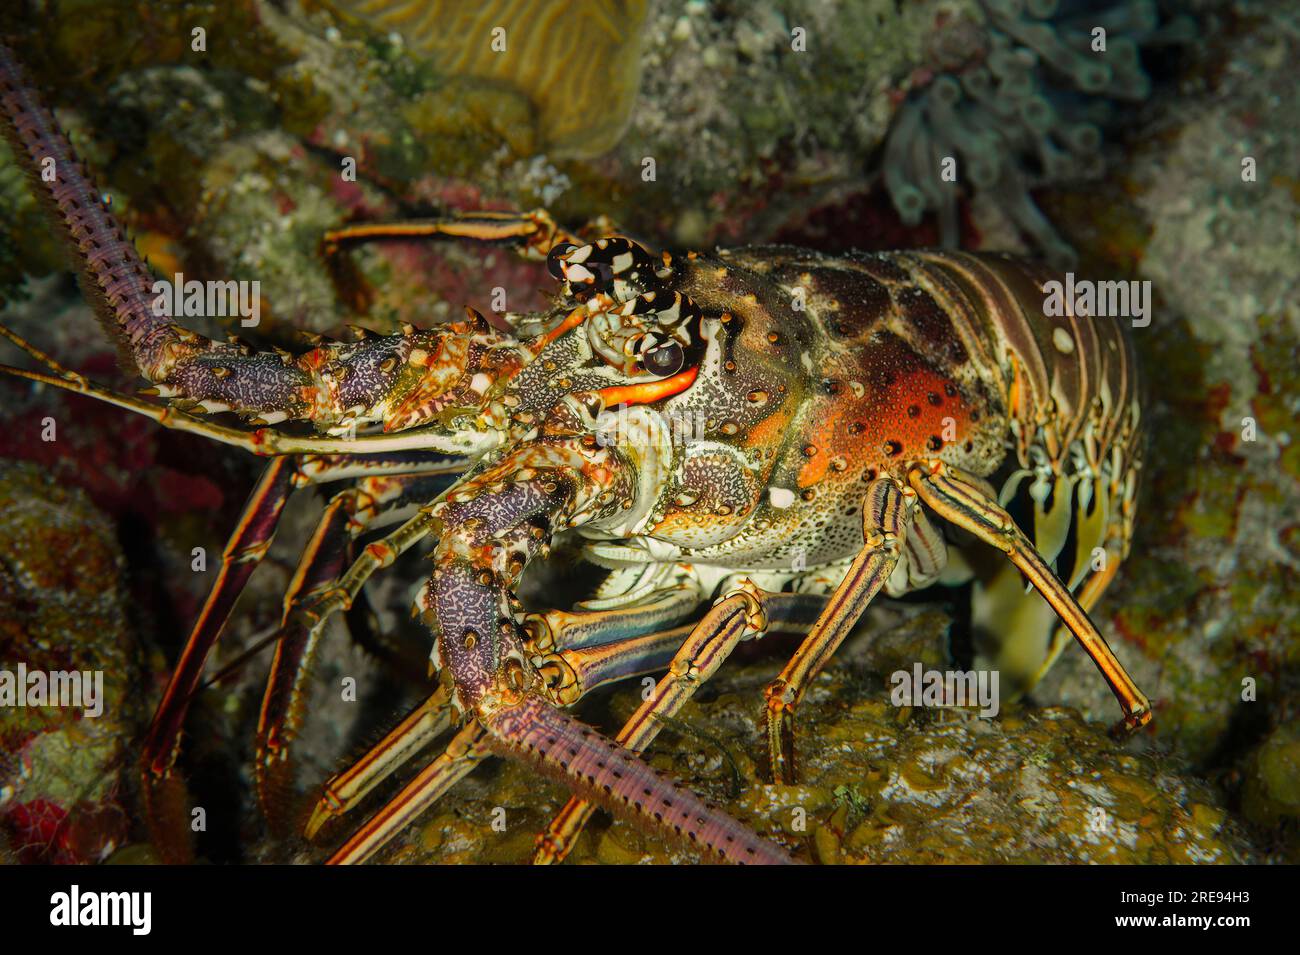 Caribbean Spiny Lobster (Panulirus argus), Bloody Bay Wall, Little Cayman island, Caribbean Sea Stock Photo